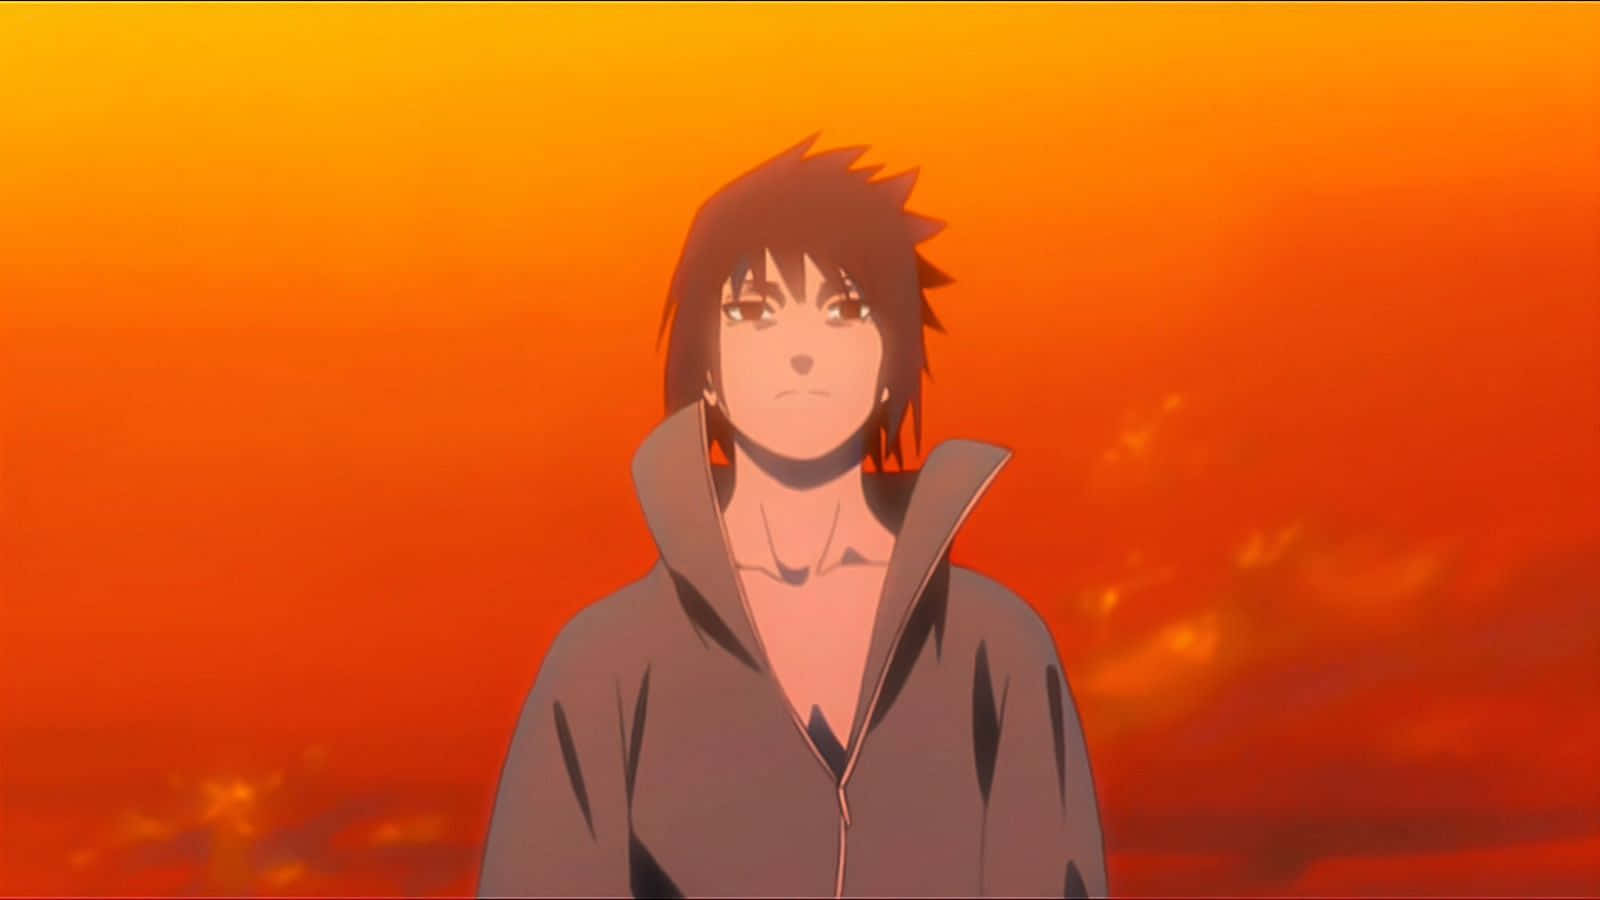 Sasuke Naruto billeder på rød og oranger striber baggrund